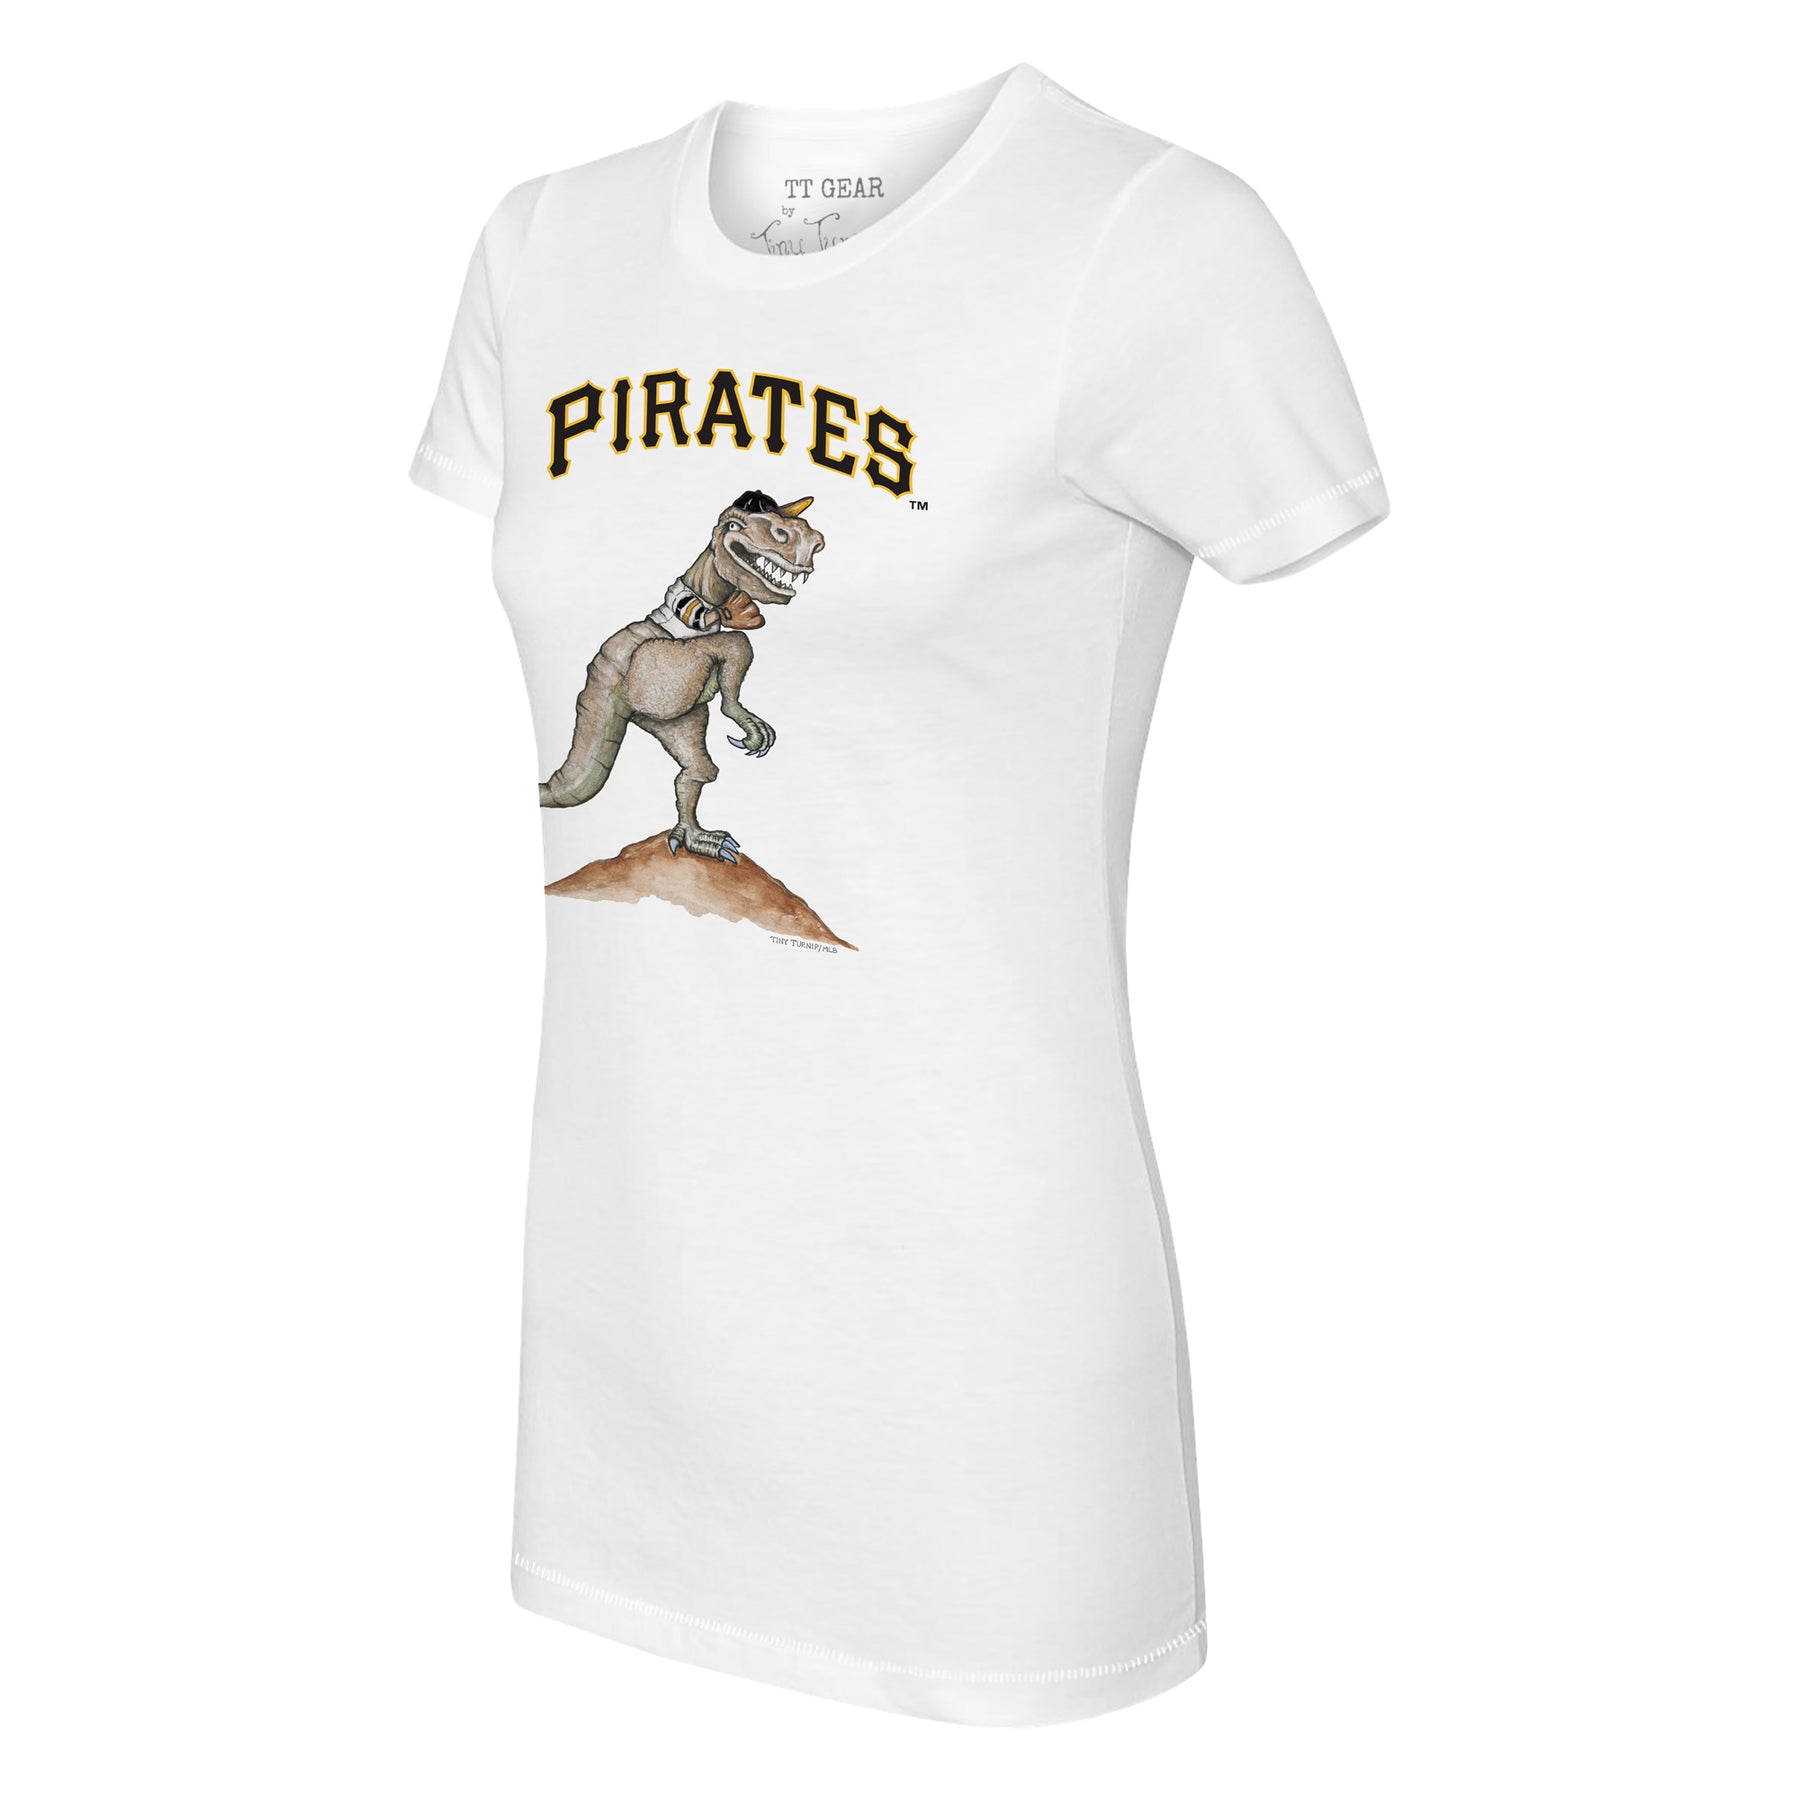 Tiny Turnip Pittsburgh Pirates Stitched Baseball Tee Shirt Youth Large (10-12) / Black